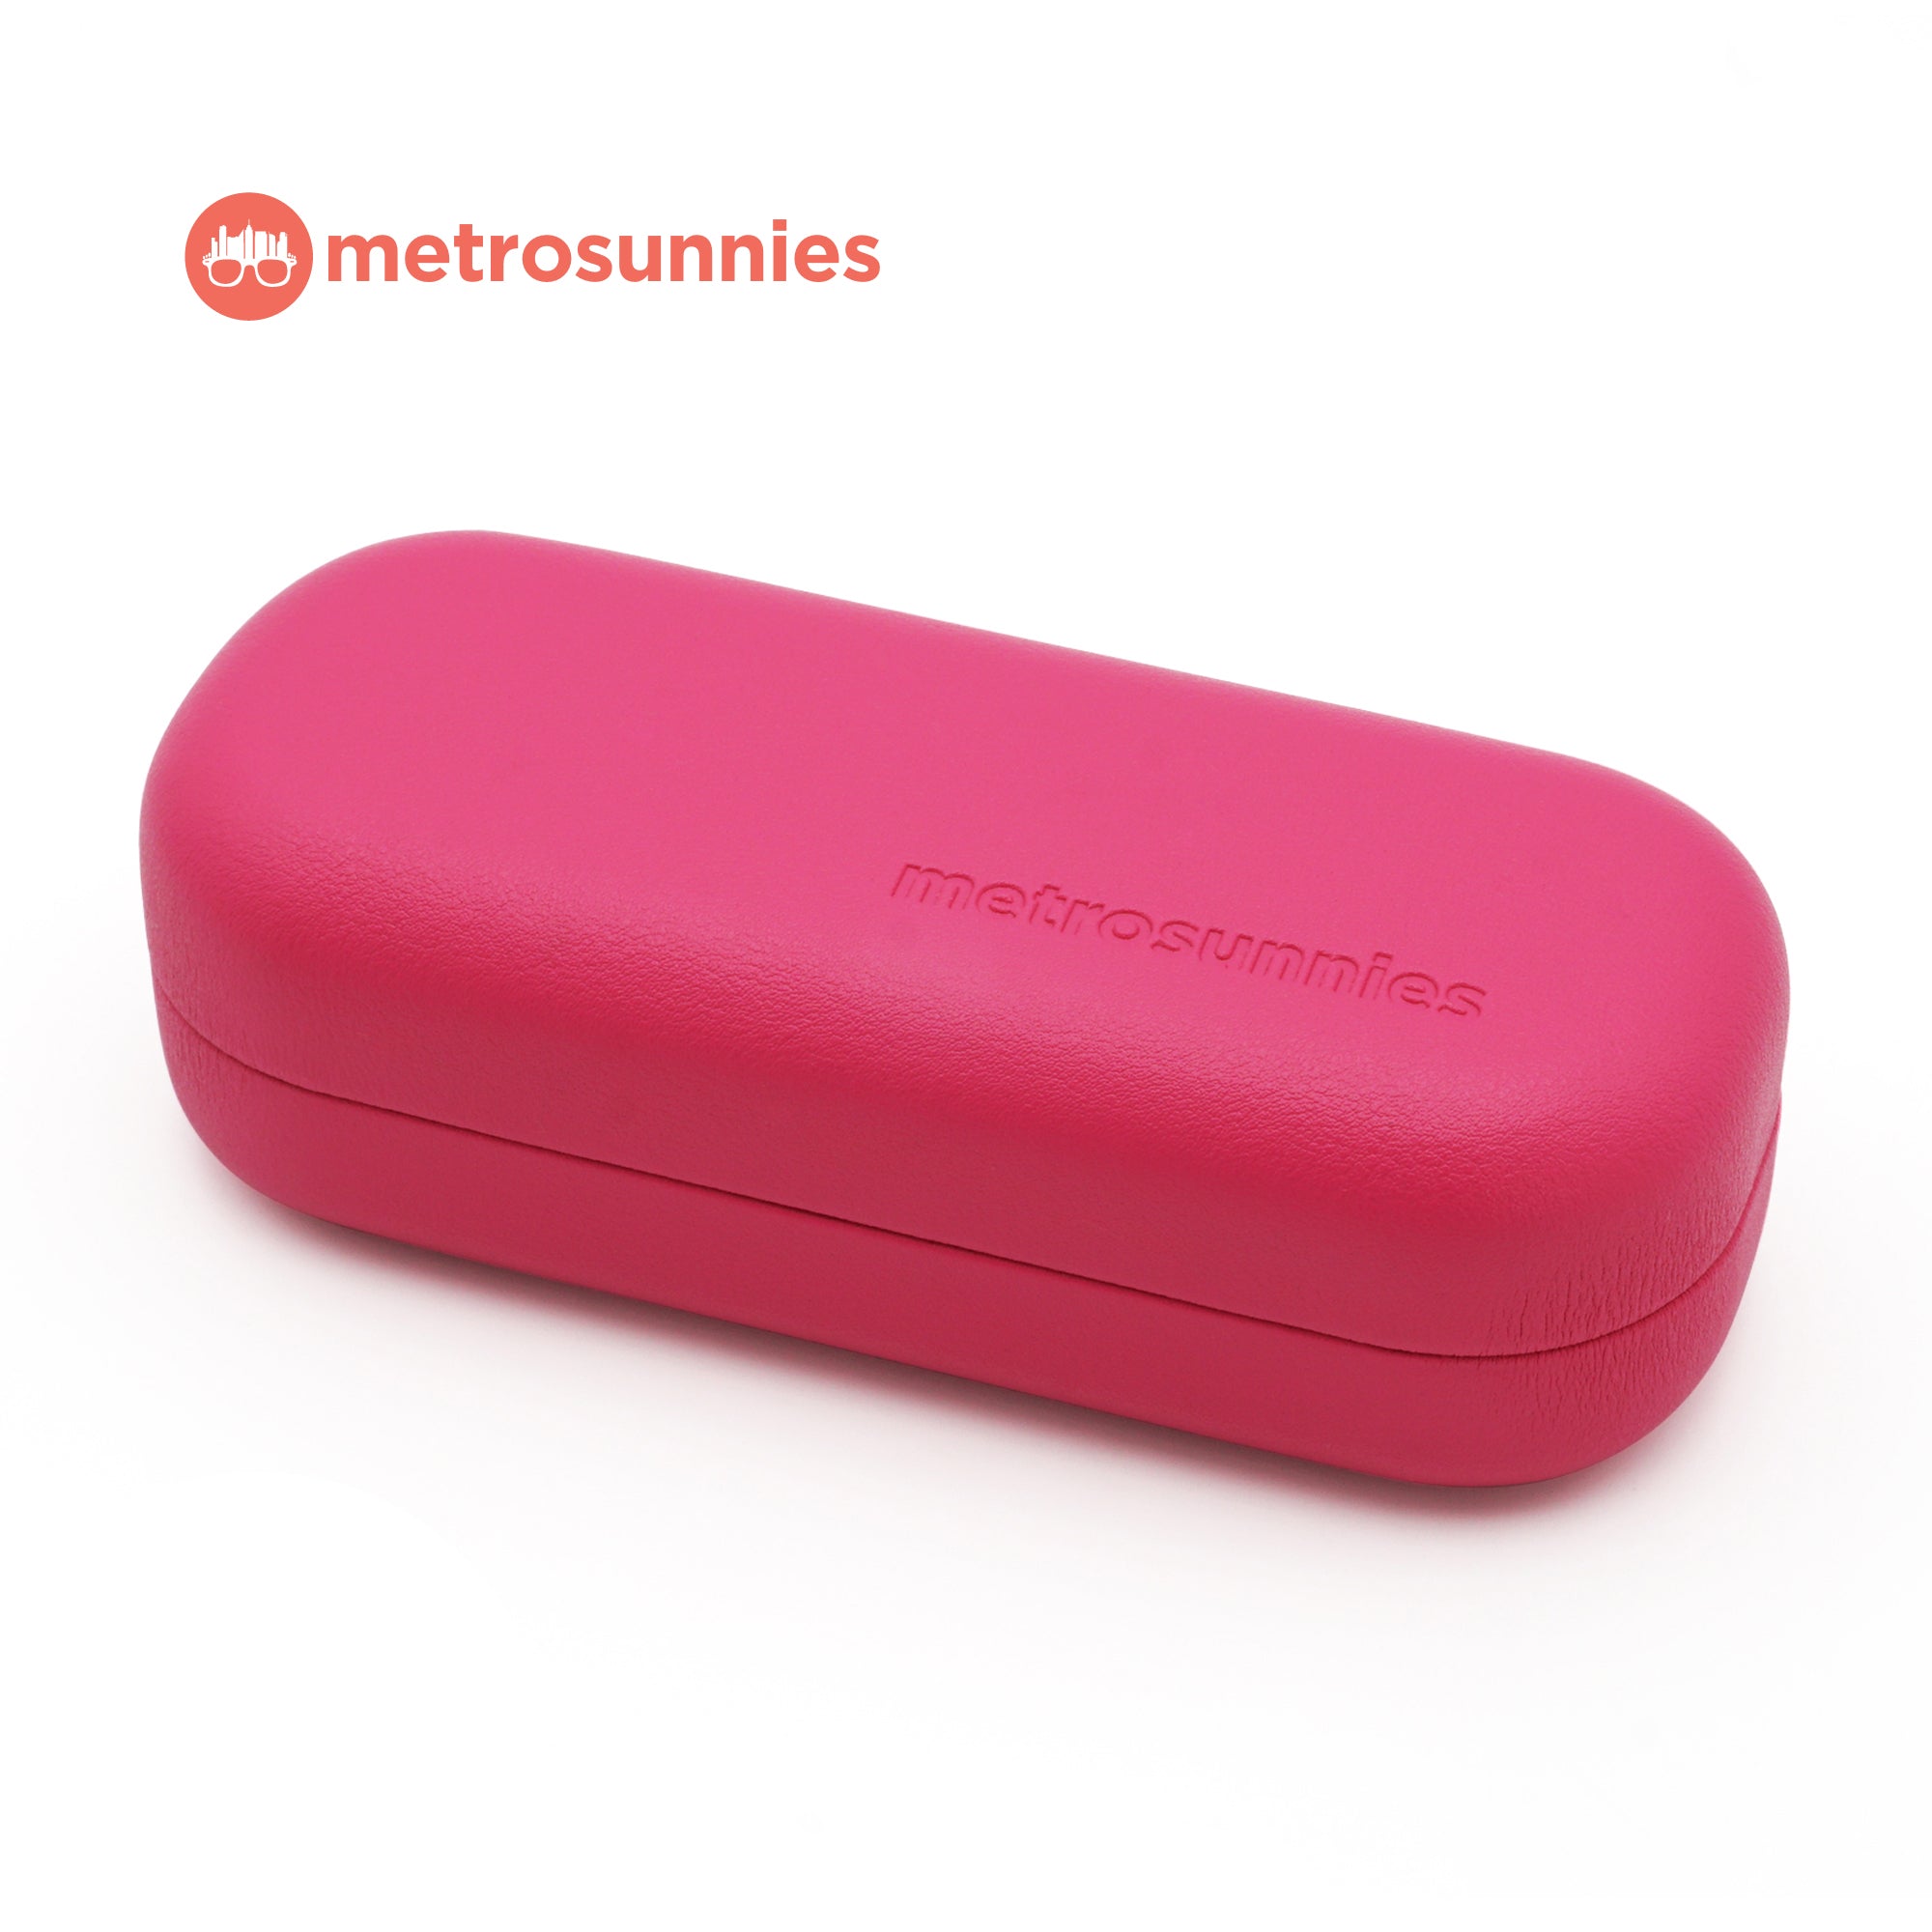 MetroSunnies Charm Hard Case Holder (Hot Pink) / Eyewear Case Holder for Sunnies and Specs